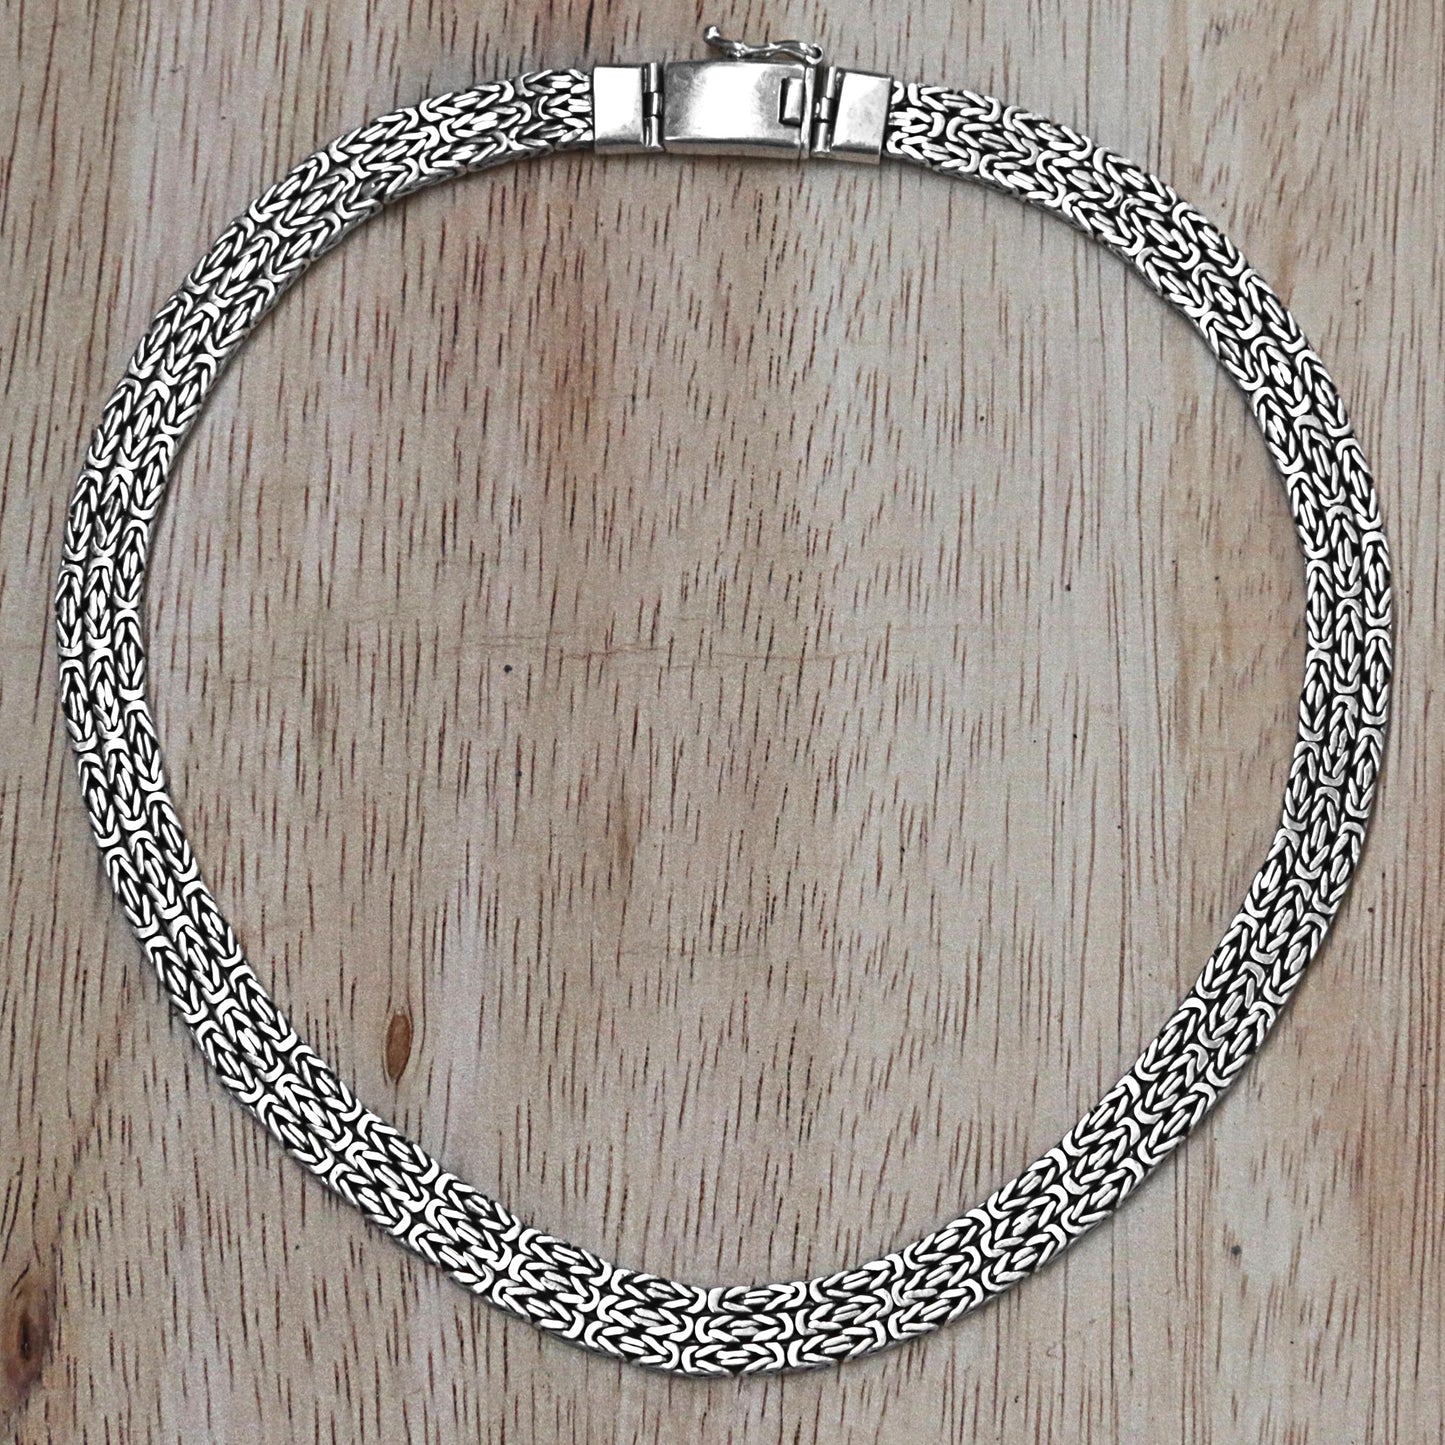 Borobudur Links Silver Chain Necklace